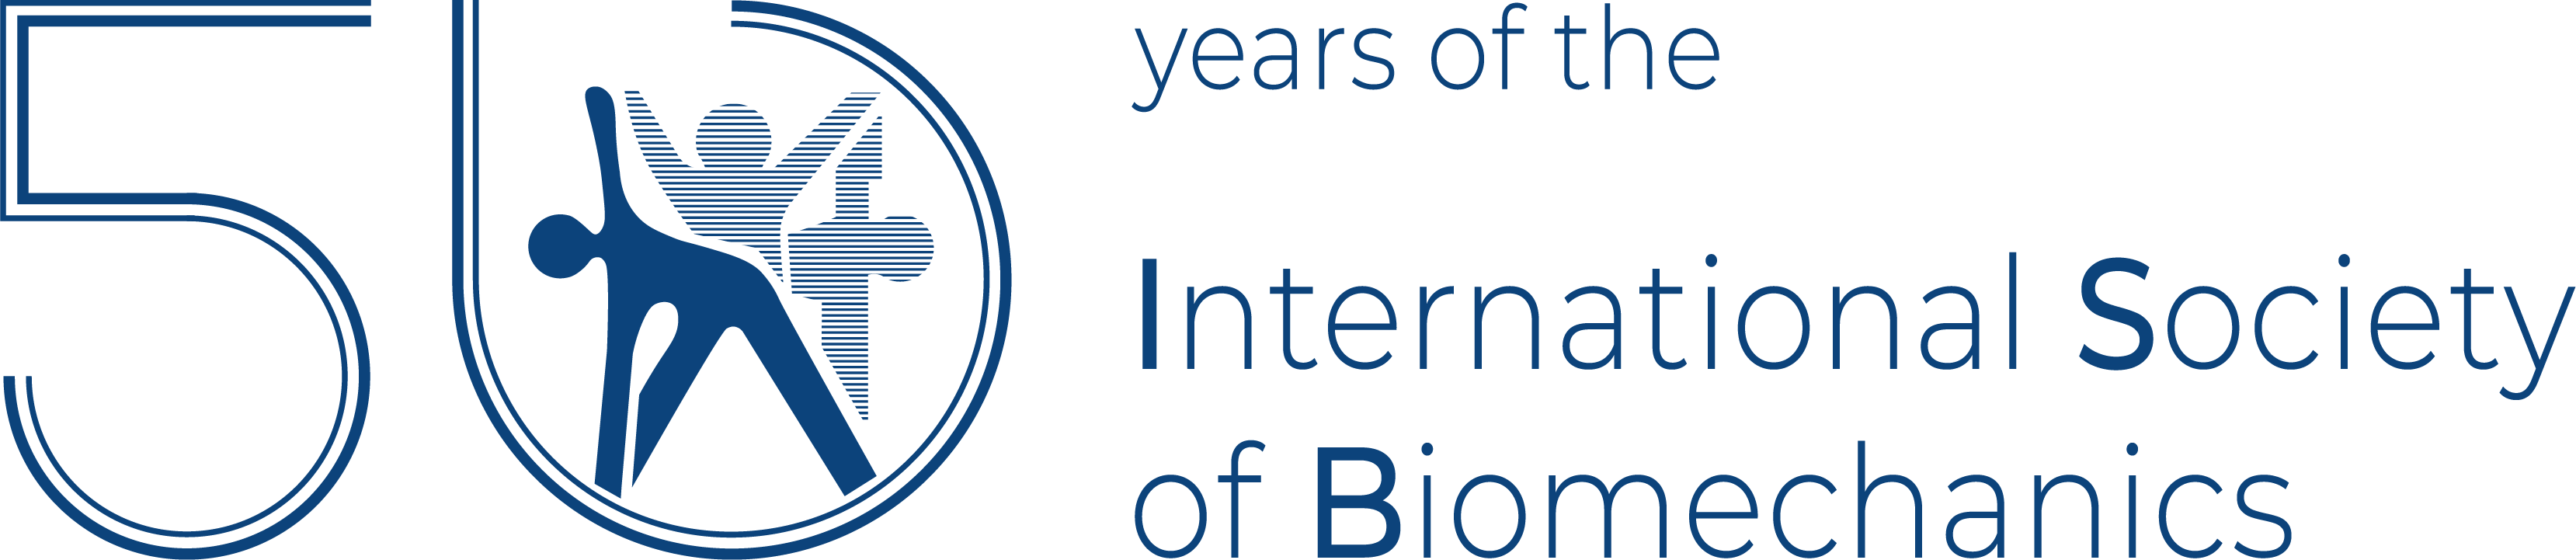 ISB 50 years logo